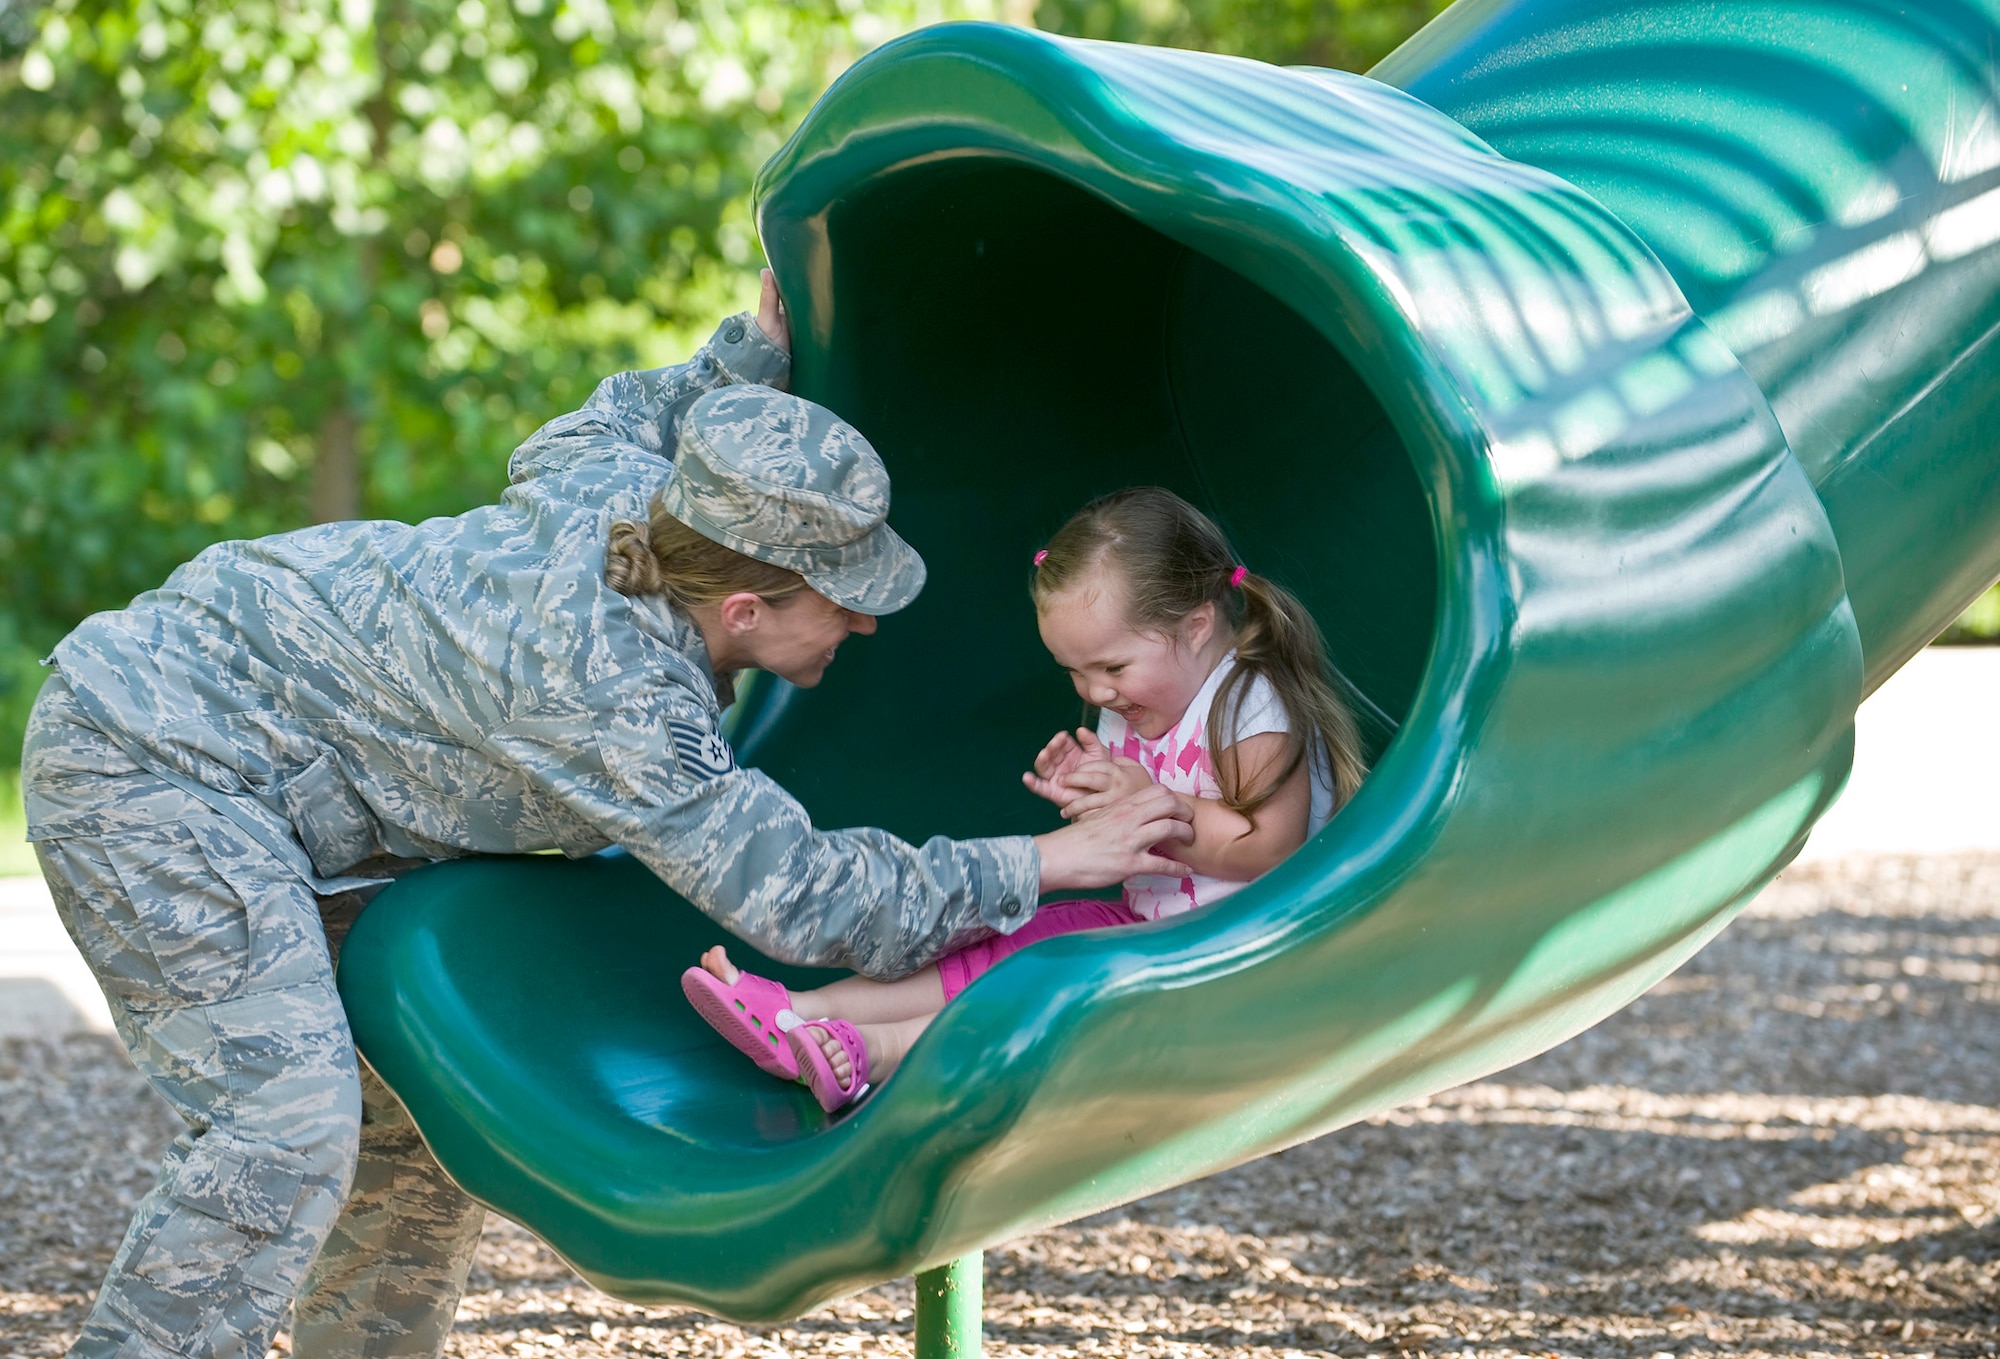 Tech. Sgt. Christina Gamez catches her daughter, Ava, while sliding at their neighborhood park. (U.S. Air Force photo/Staff Sgt. Bennie J. Davis III)